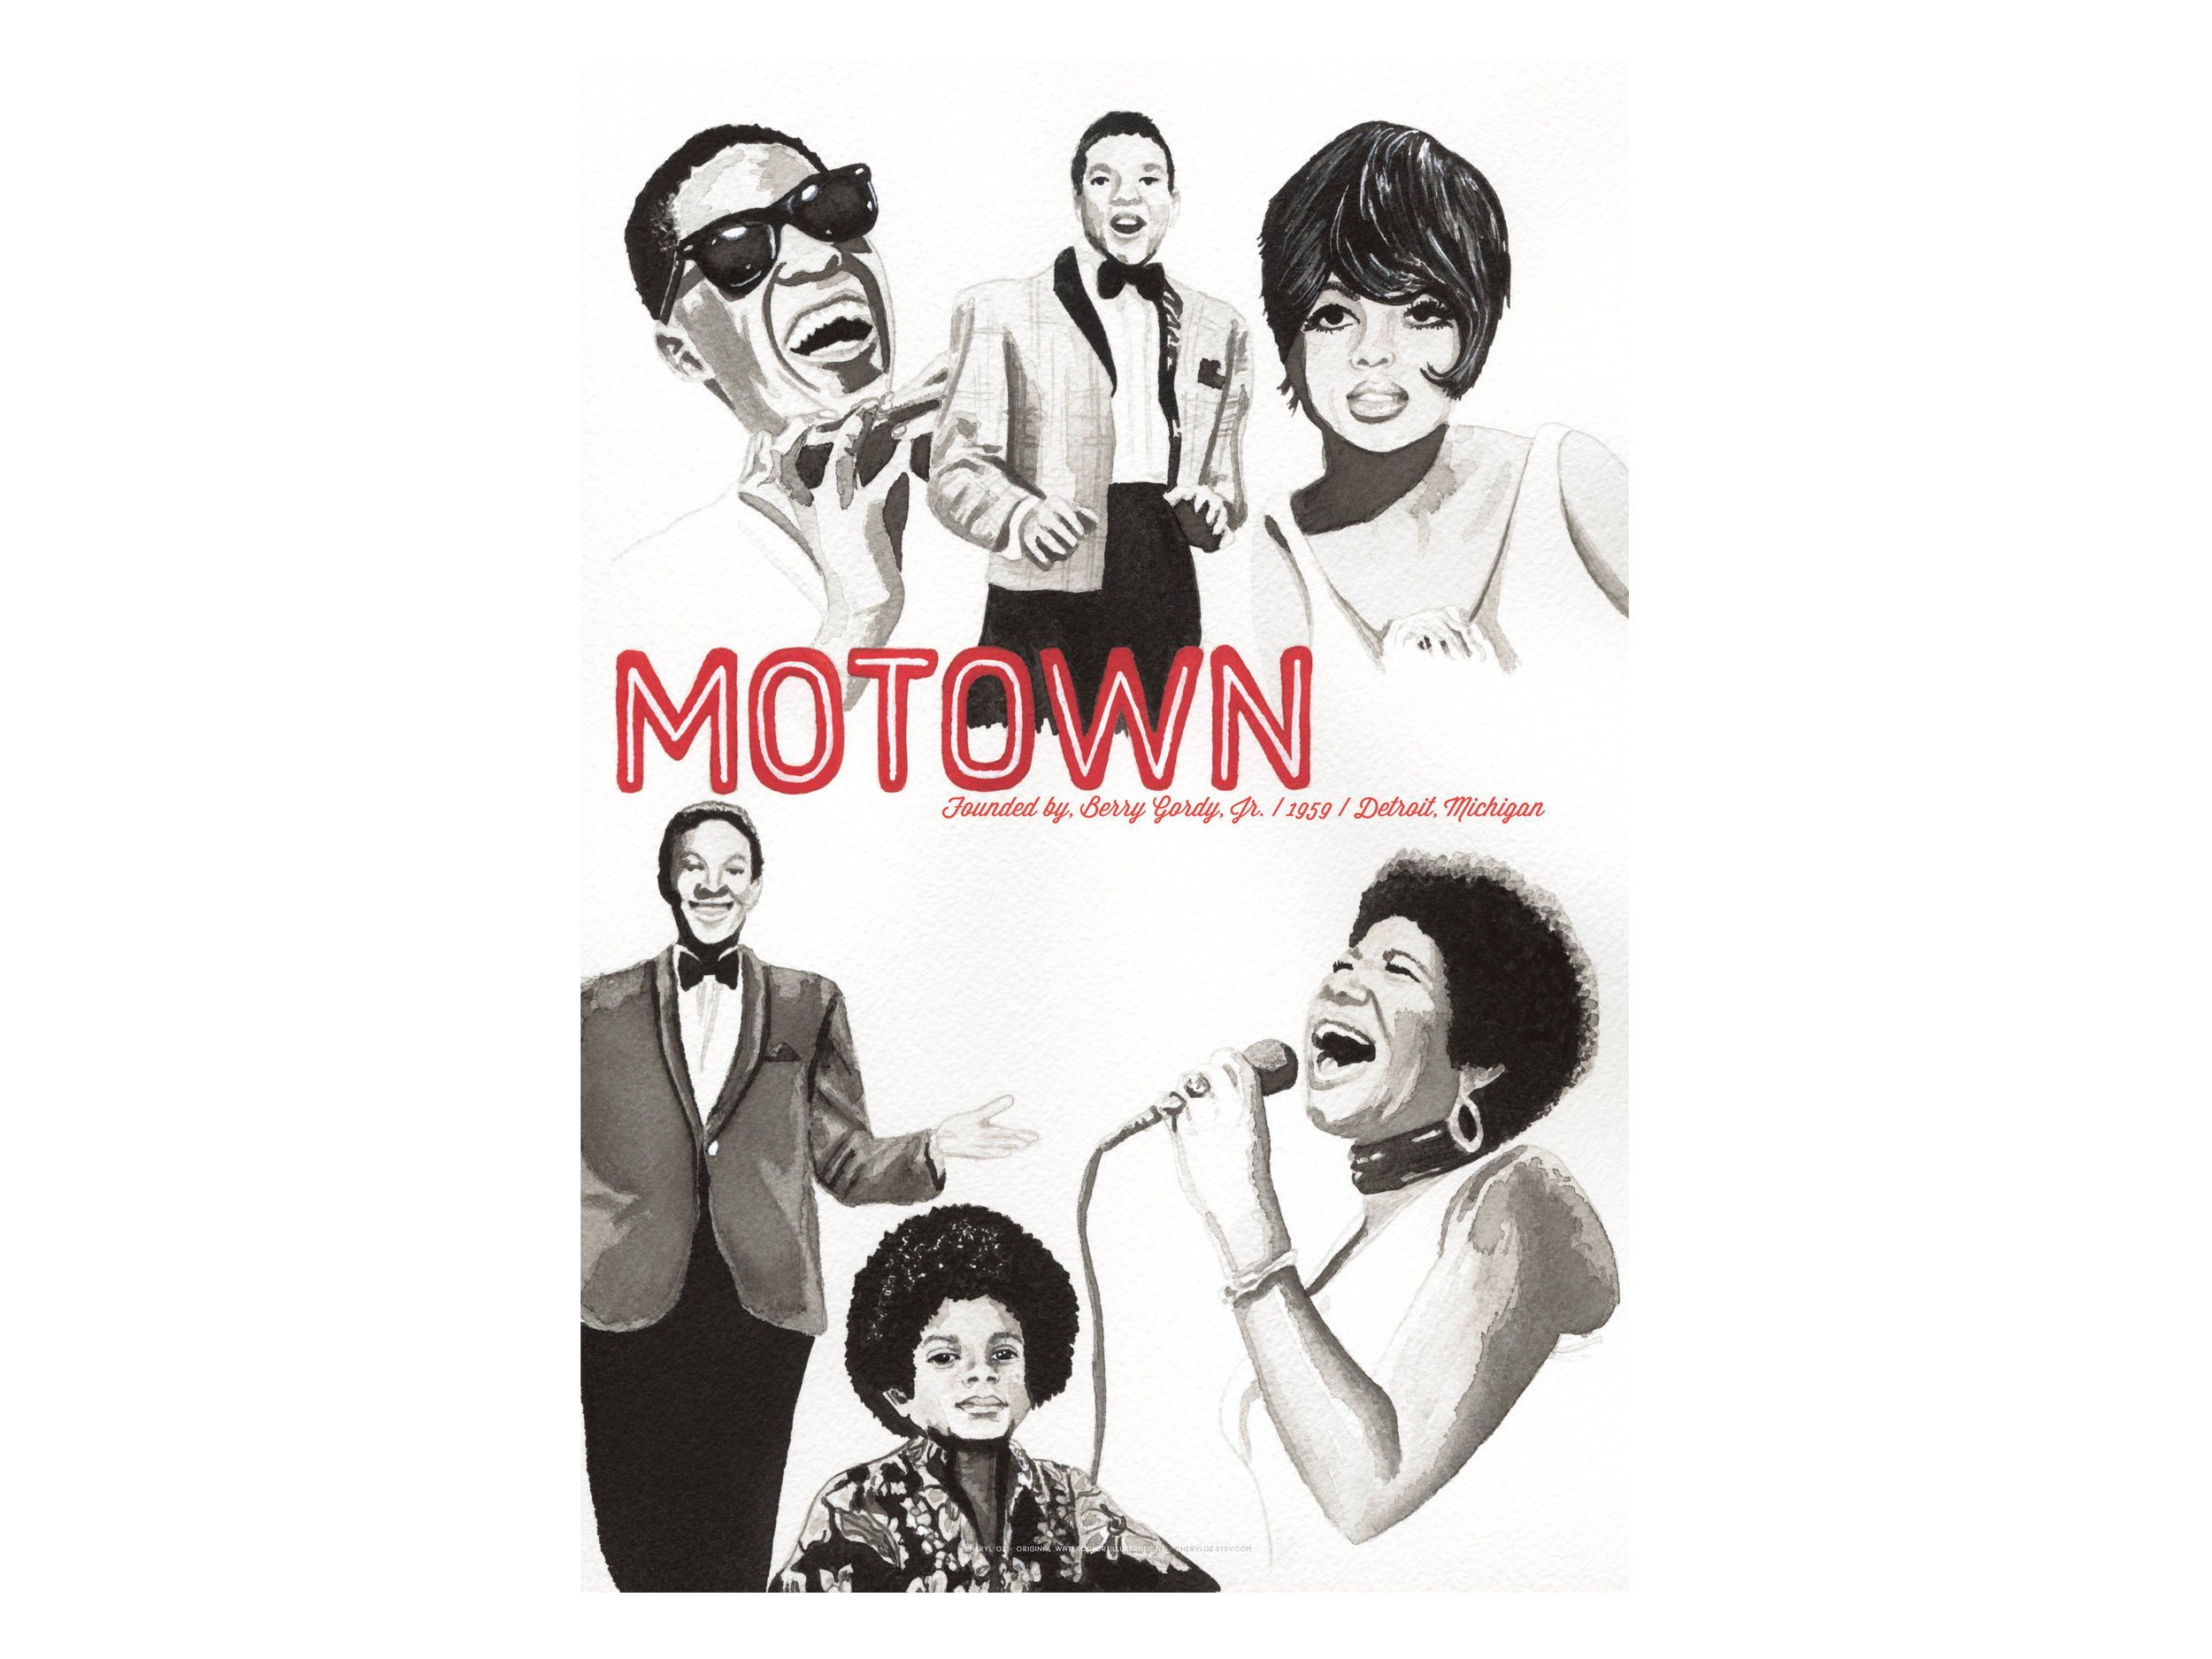 Motown Poster Design